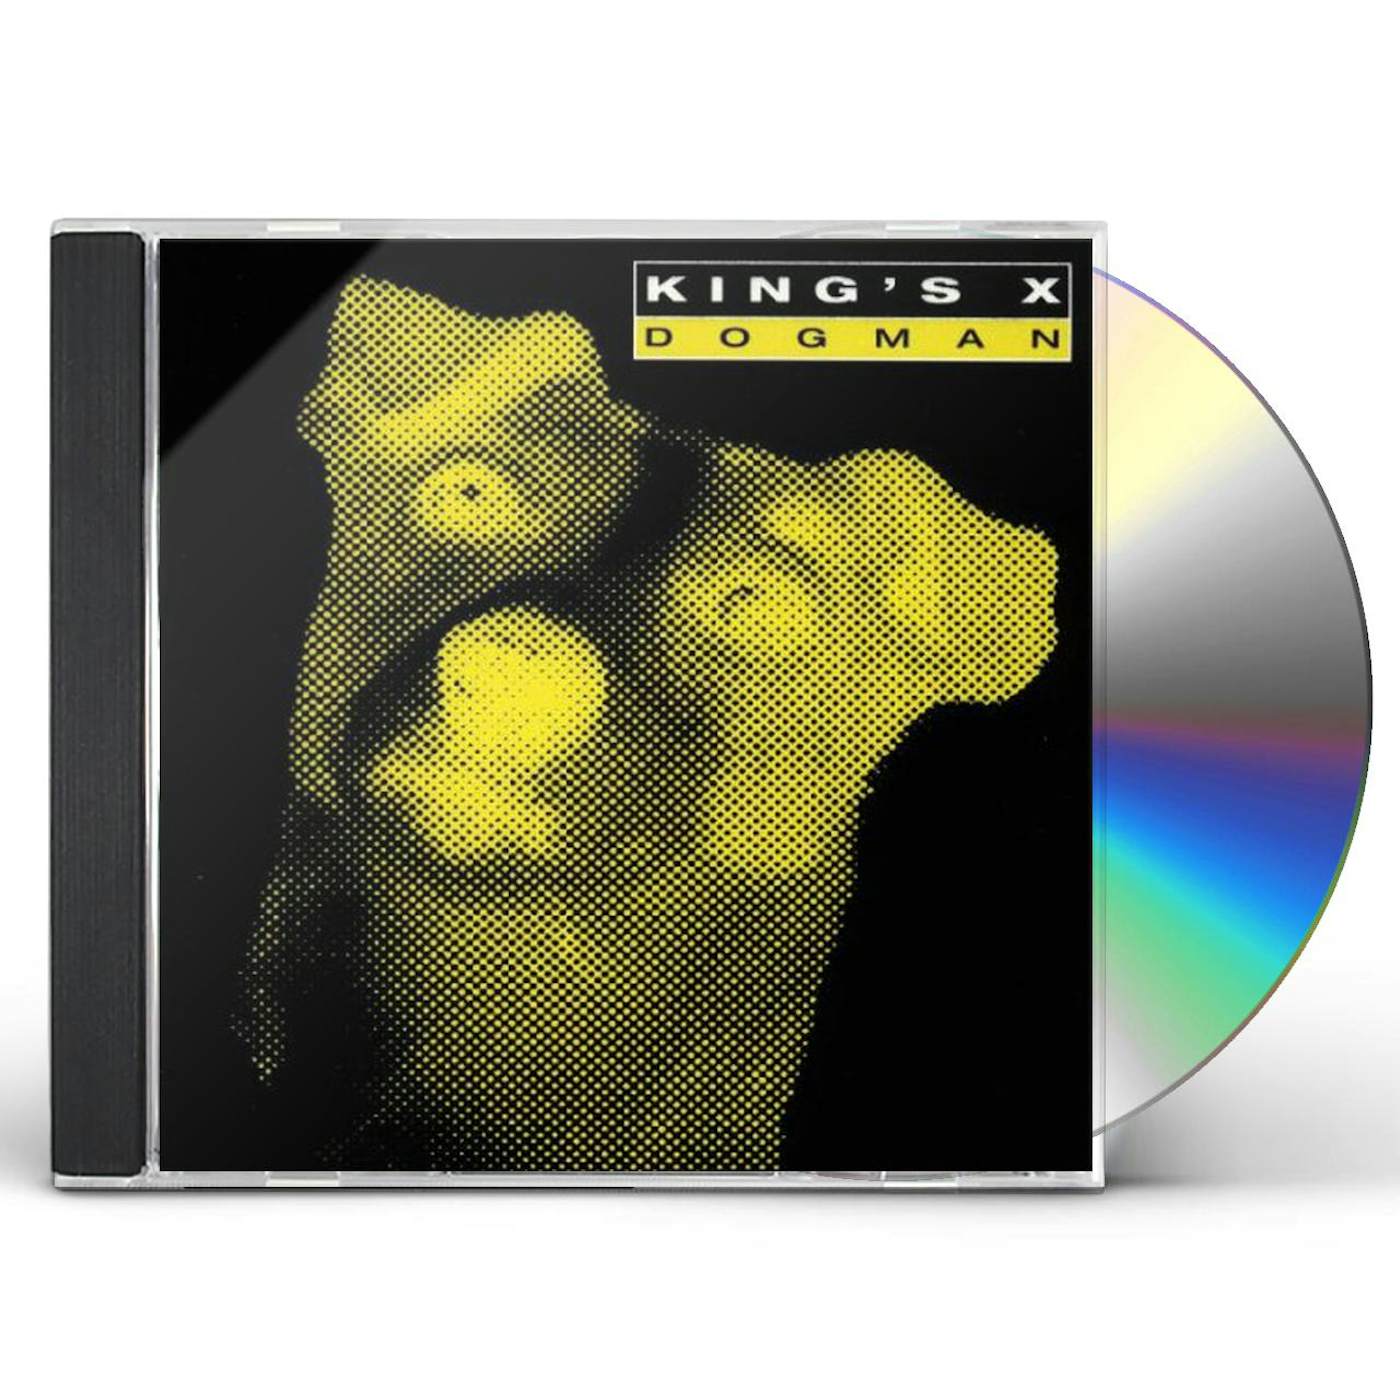 King's X DOGMAN CD